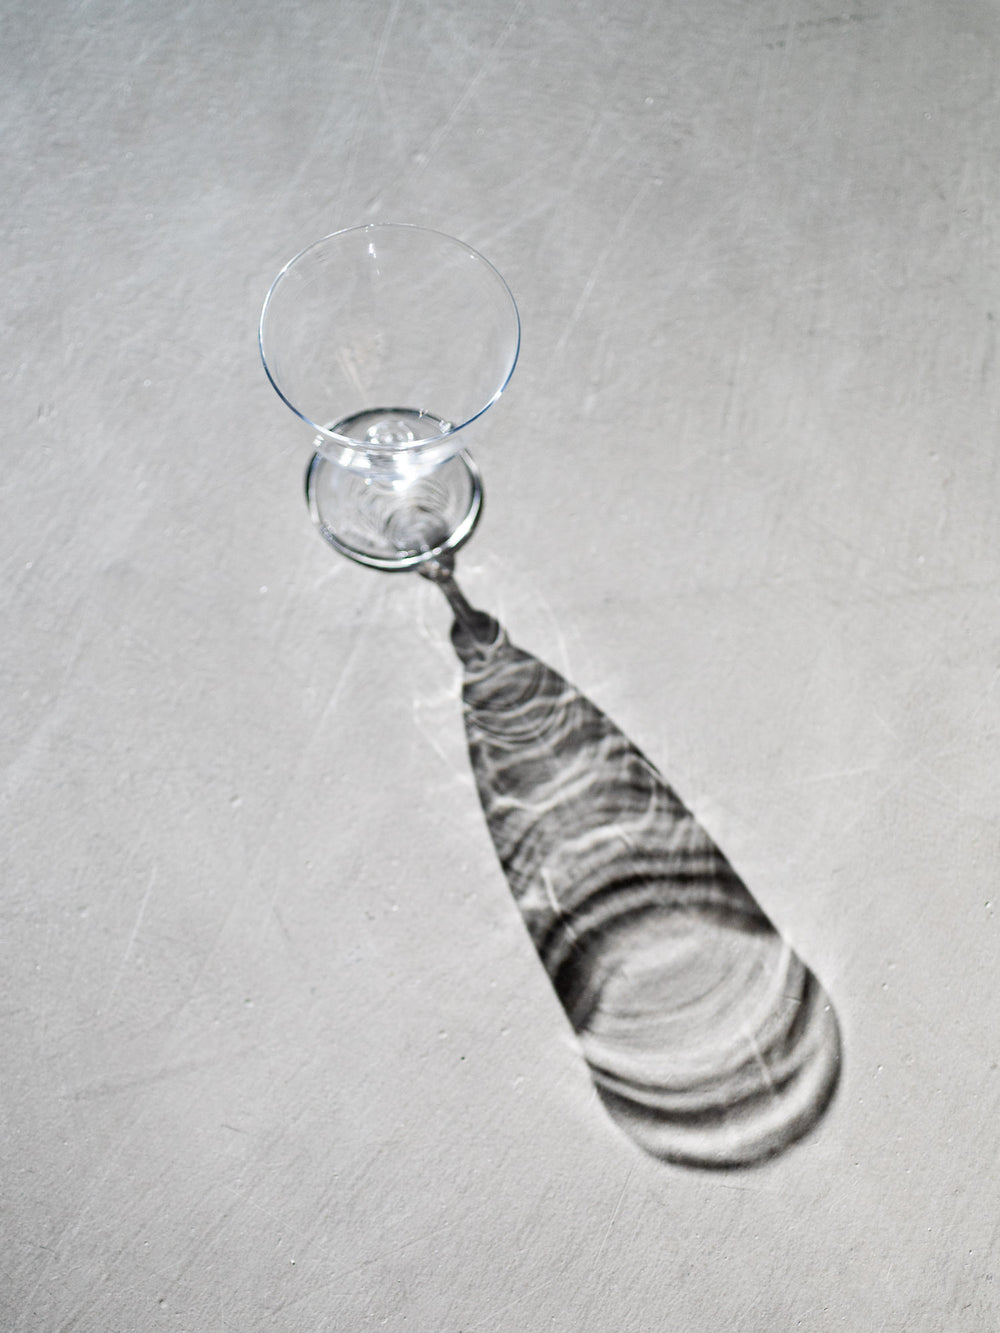 Azmaya handblown wine glass creating a long decorative shadow